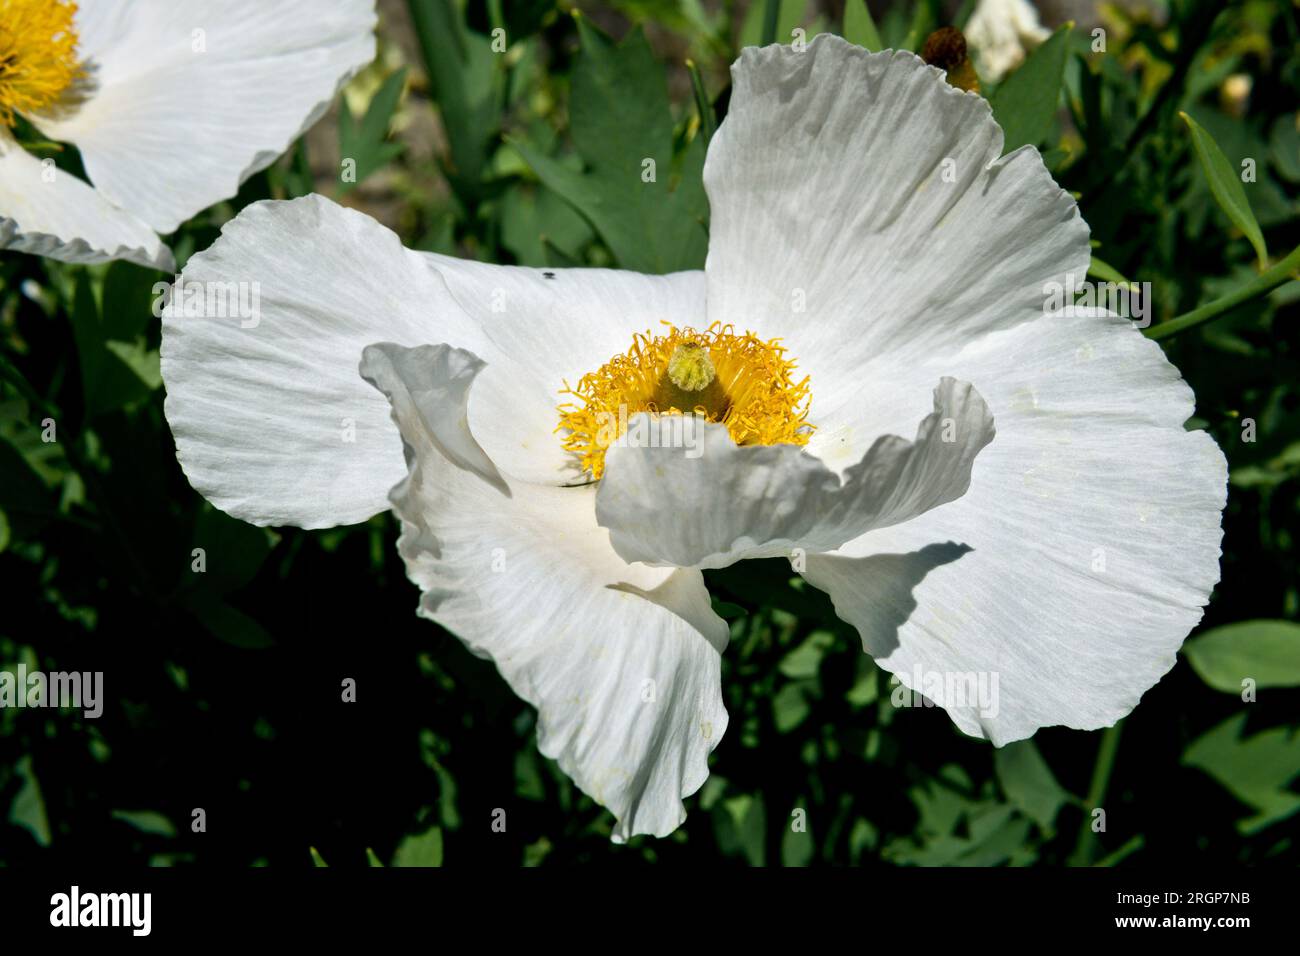 Matilija poppies or Romneya.  Beautiful white poppies with yellow centres. Stock Photo